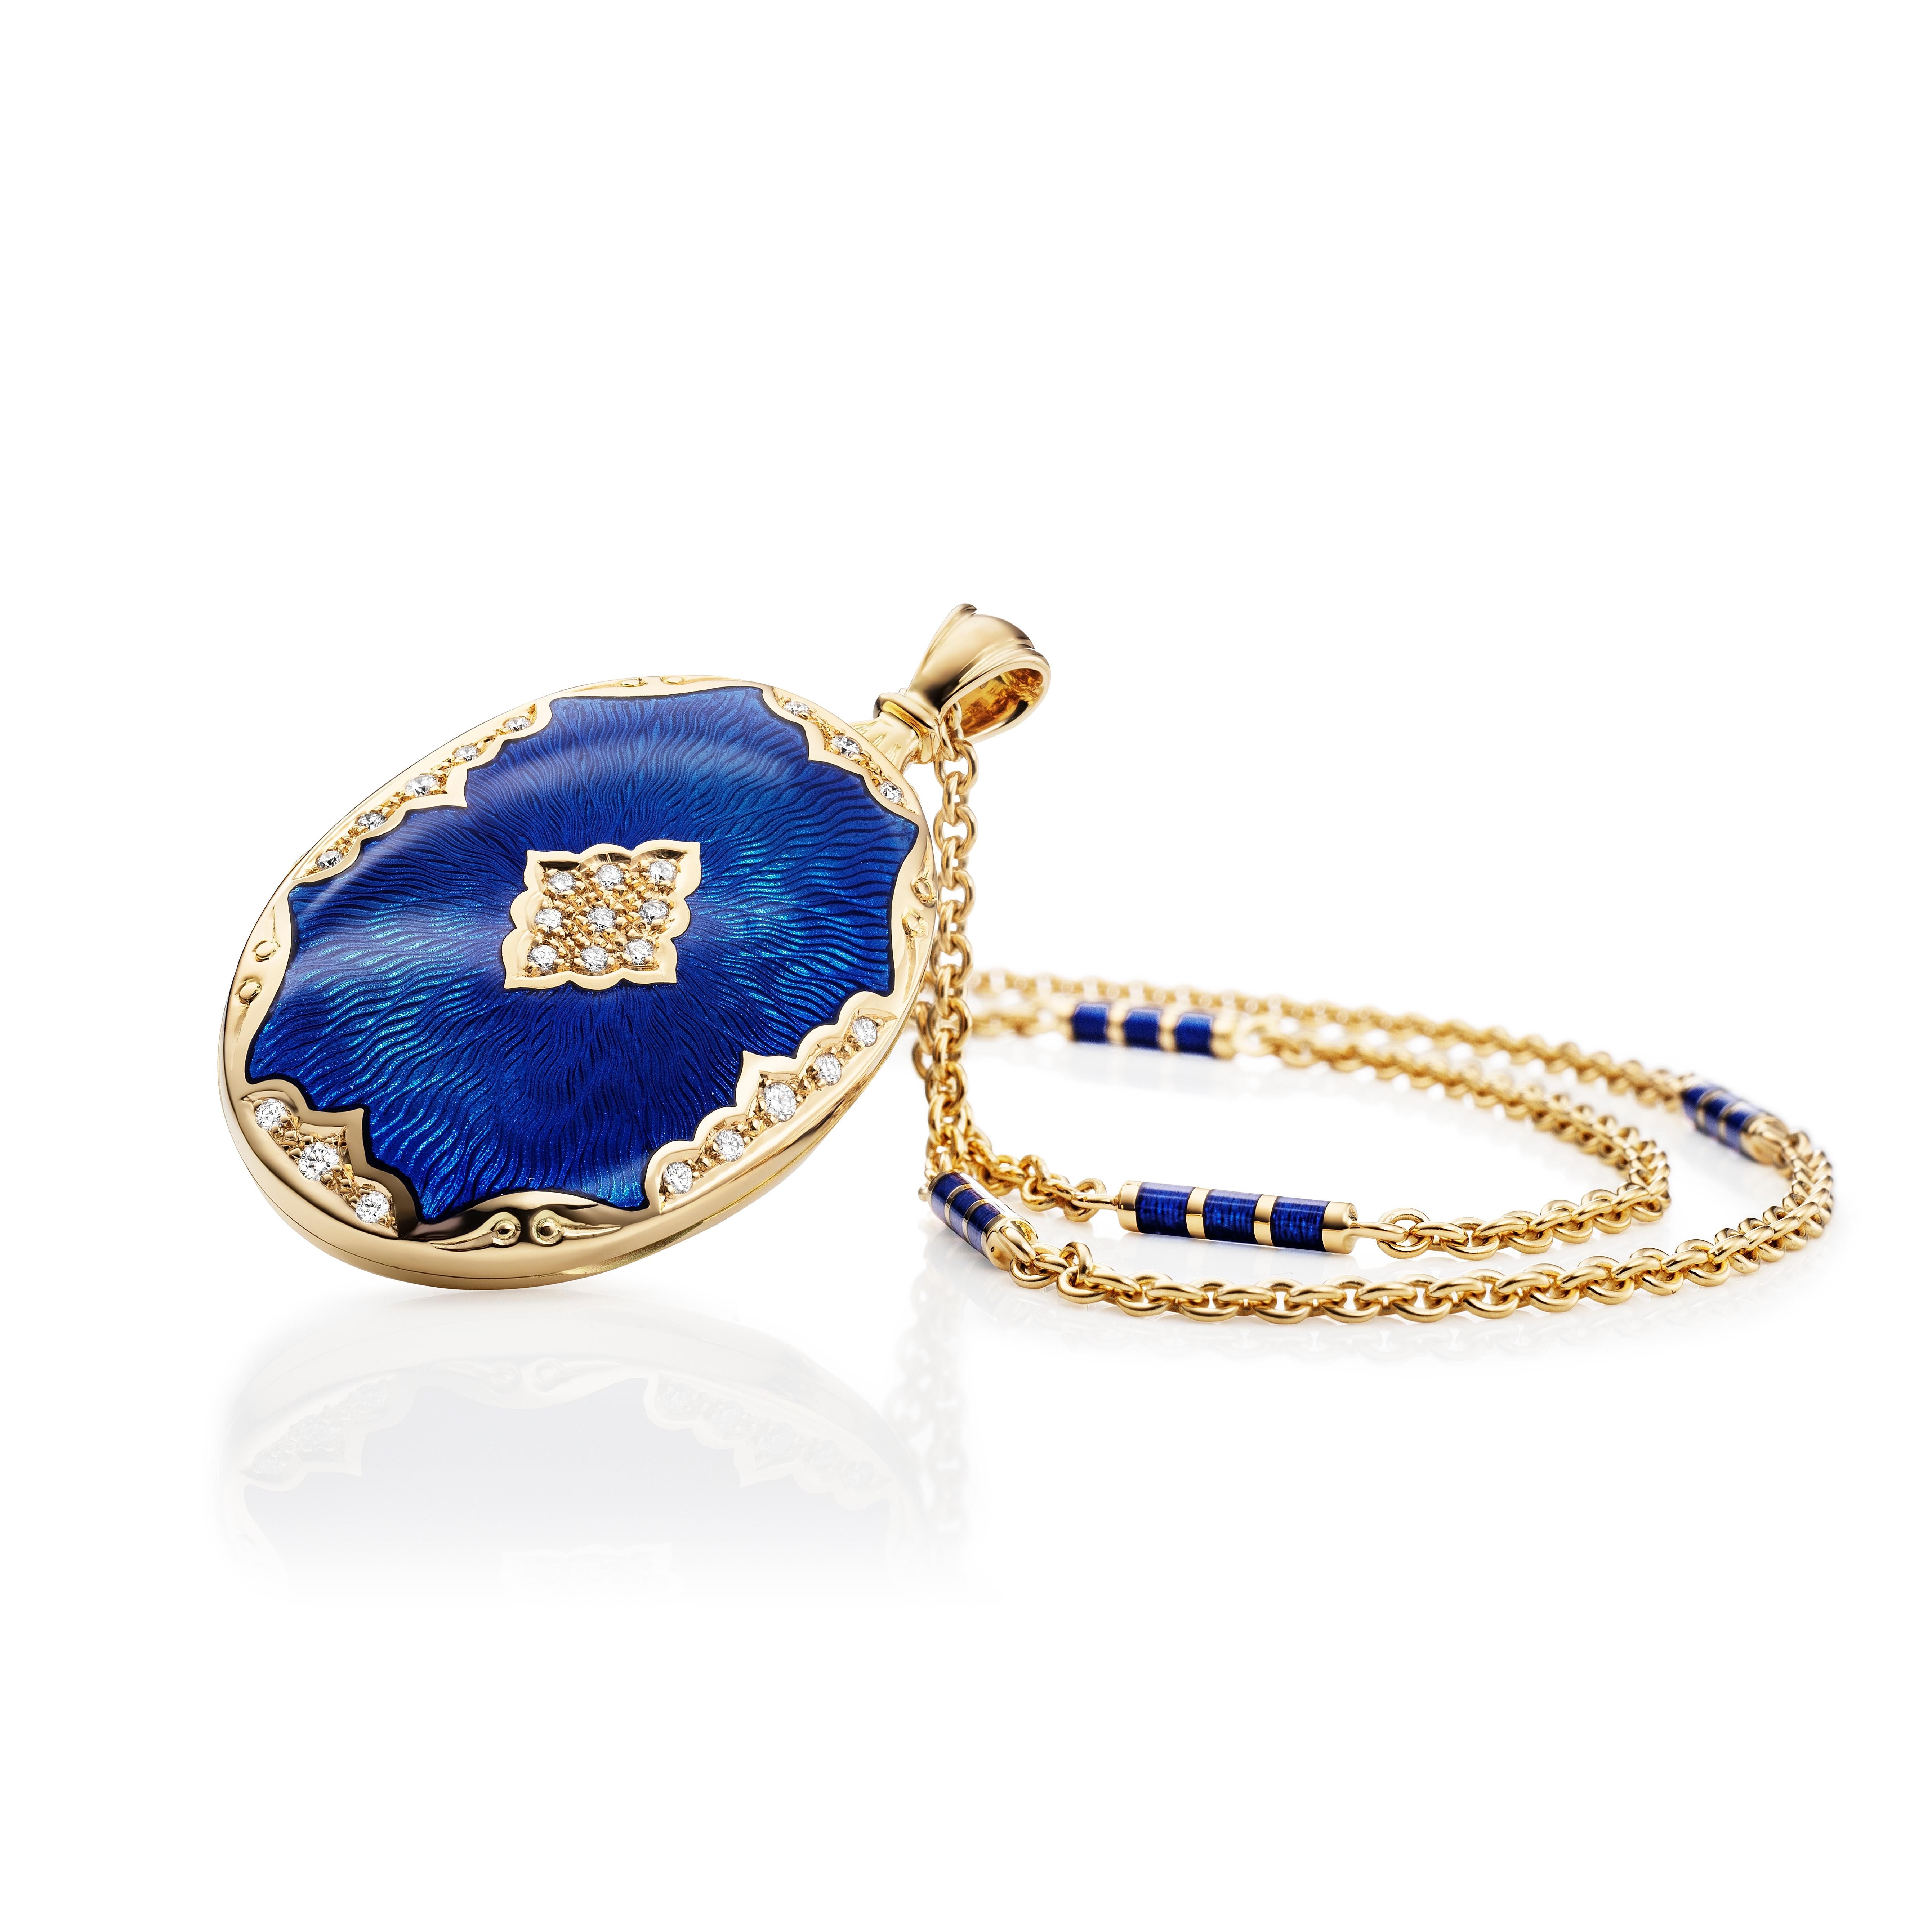 Victorian Oval Locket Pendant Necklace 18k Yellow Gold Blue Enamel 25 Diamonds 0.19 Carat For Sale